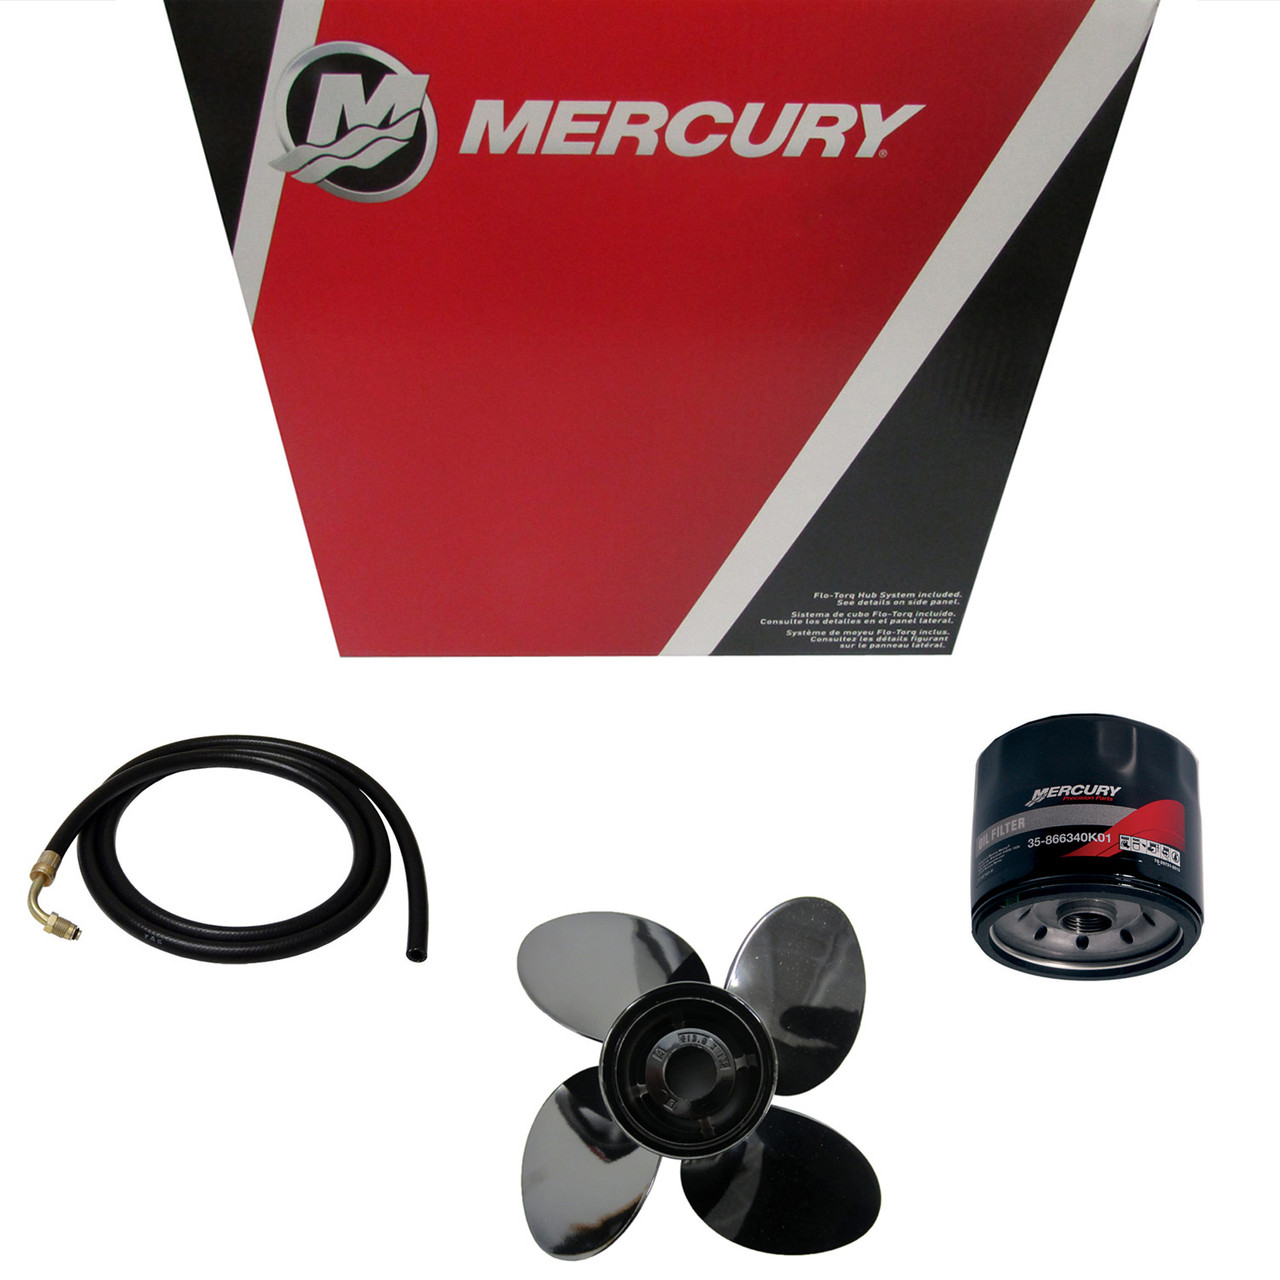 Mercury Marine / Mercruiser New OEM Gear-Driven, 43-834973001